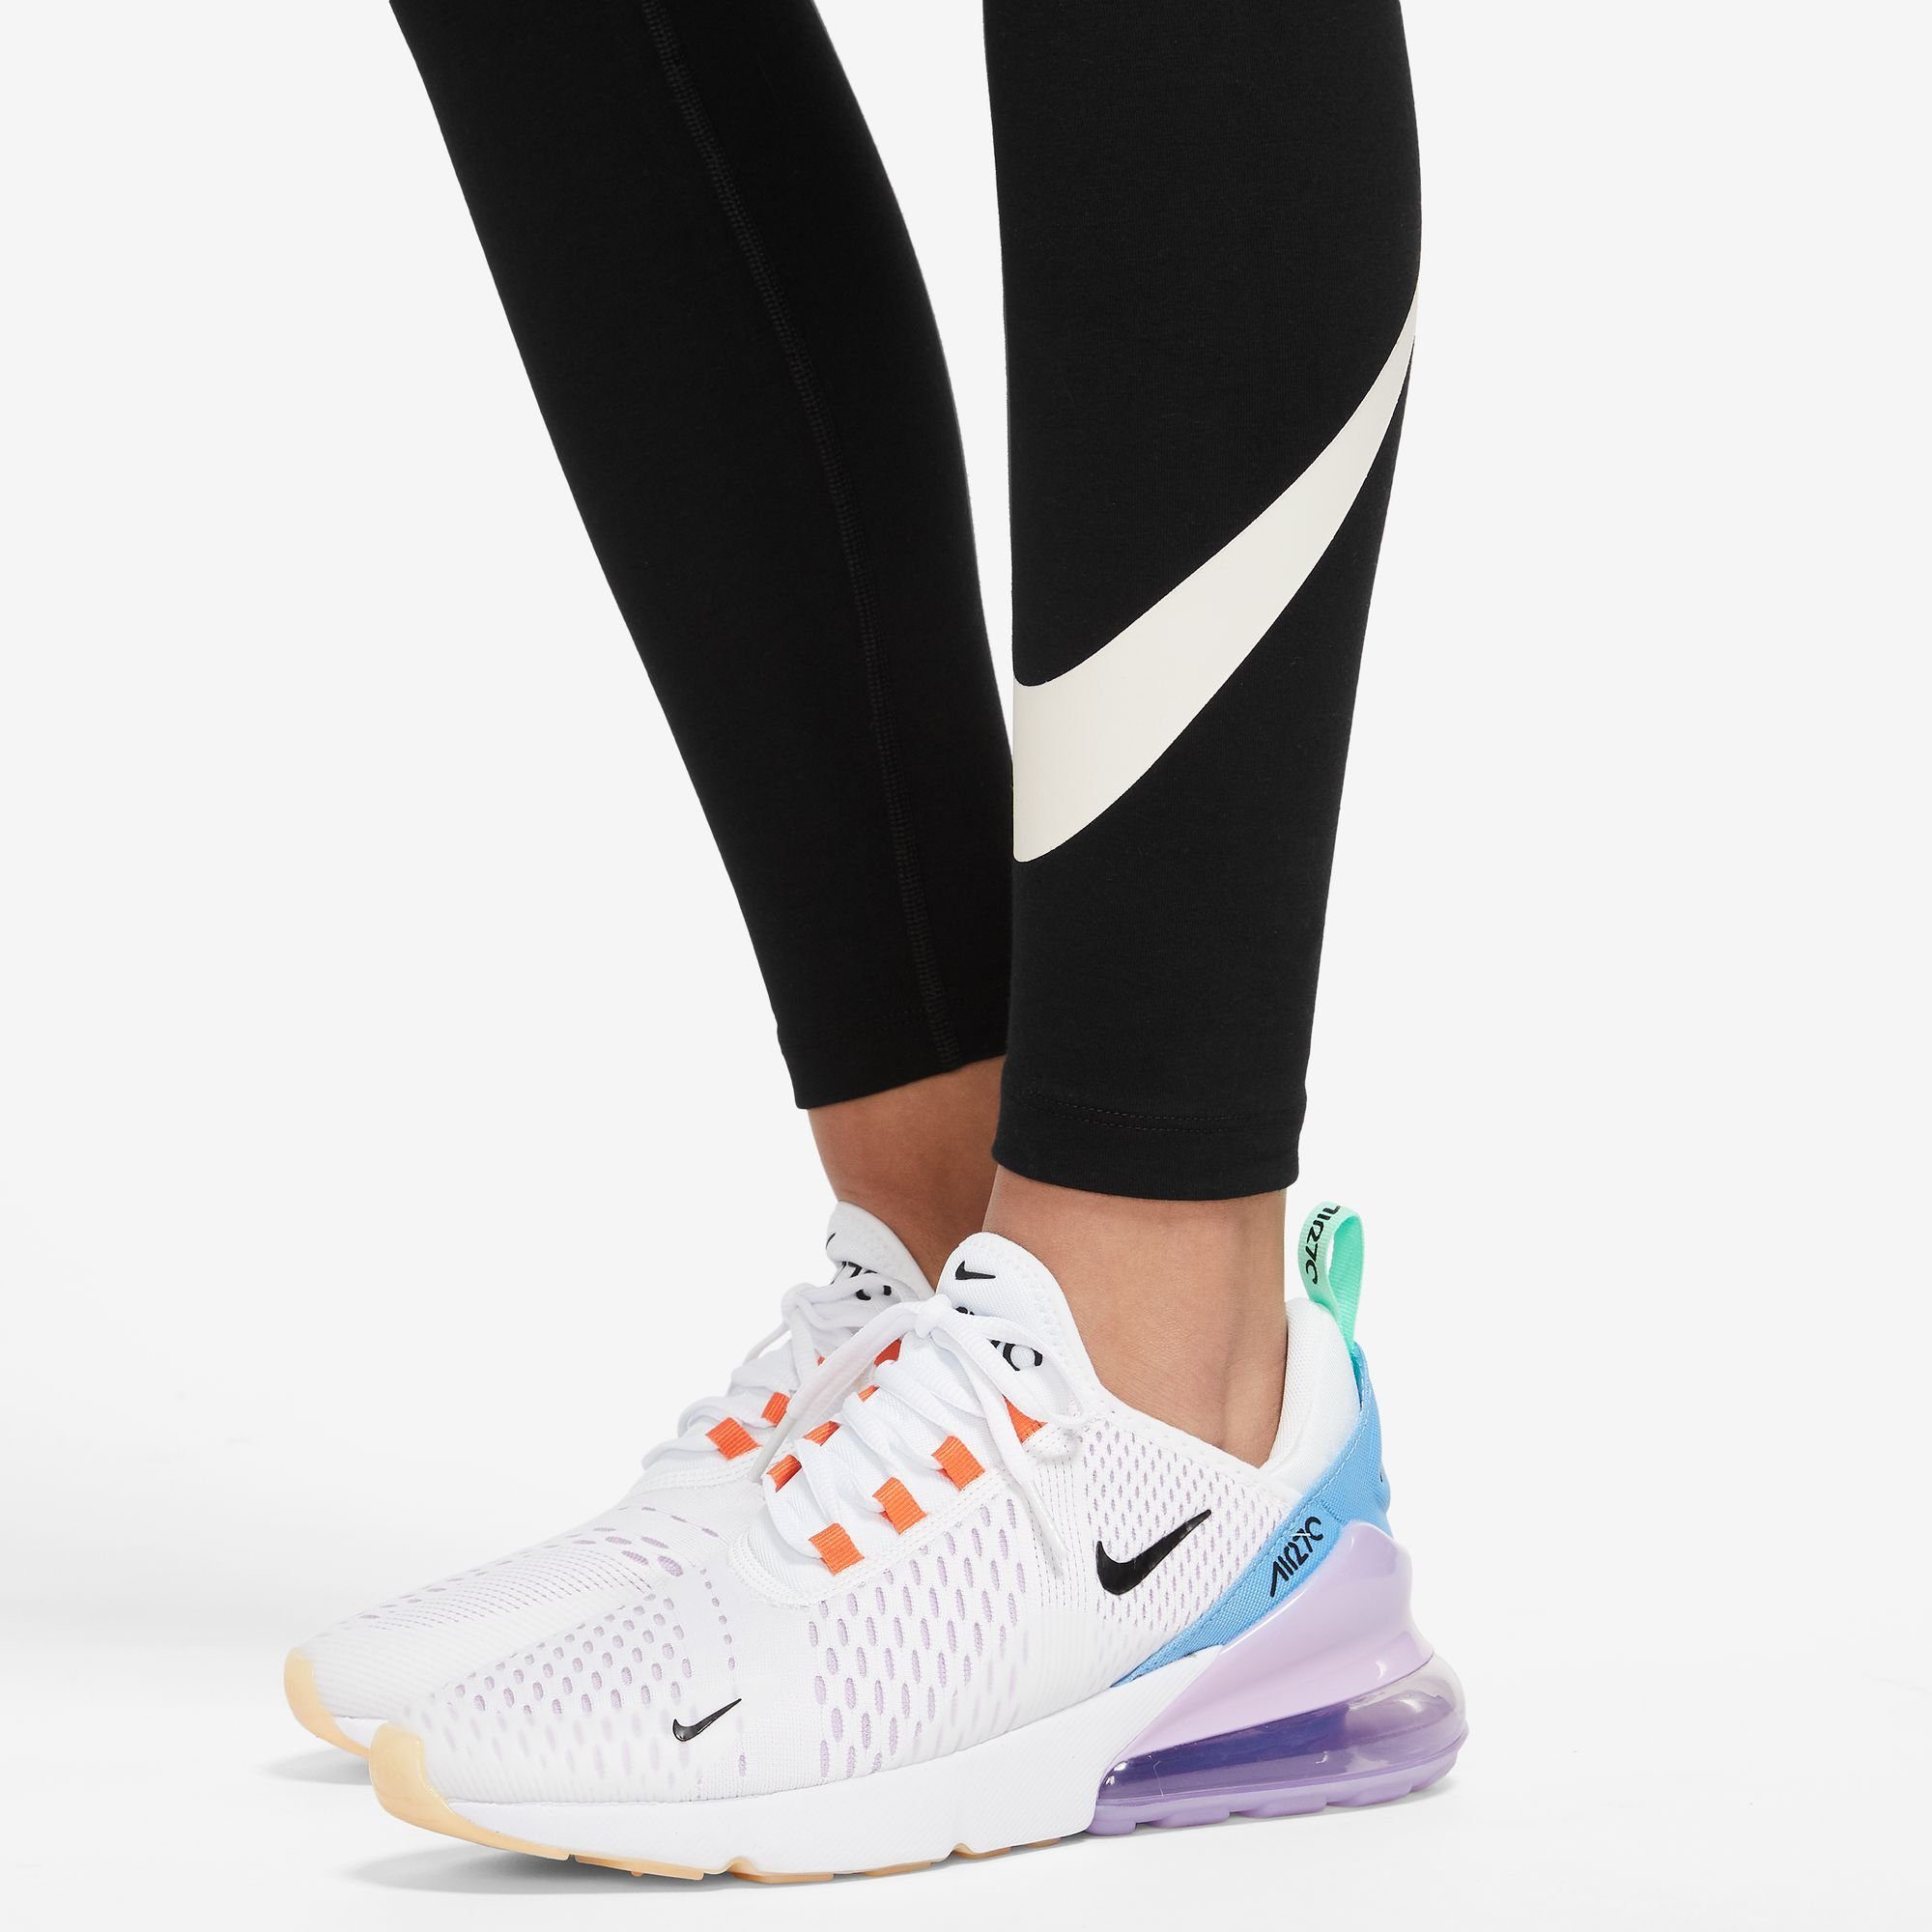 Nike Sportswear CLASSICS LEGGINGS GRAPHIC WOMEN'S BLACK/SAIL HIGH-WAISTED Leggings